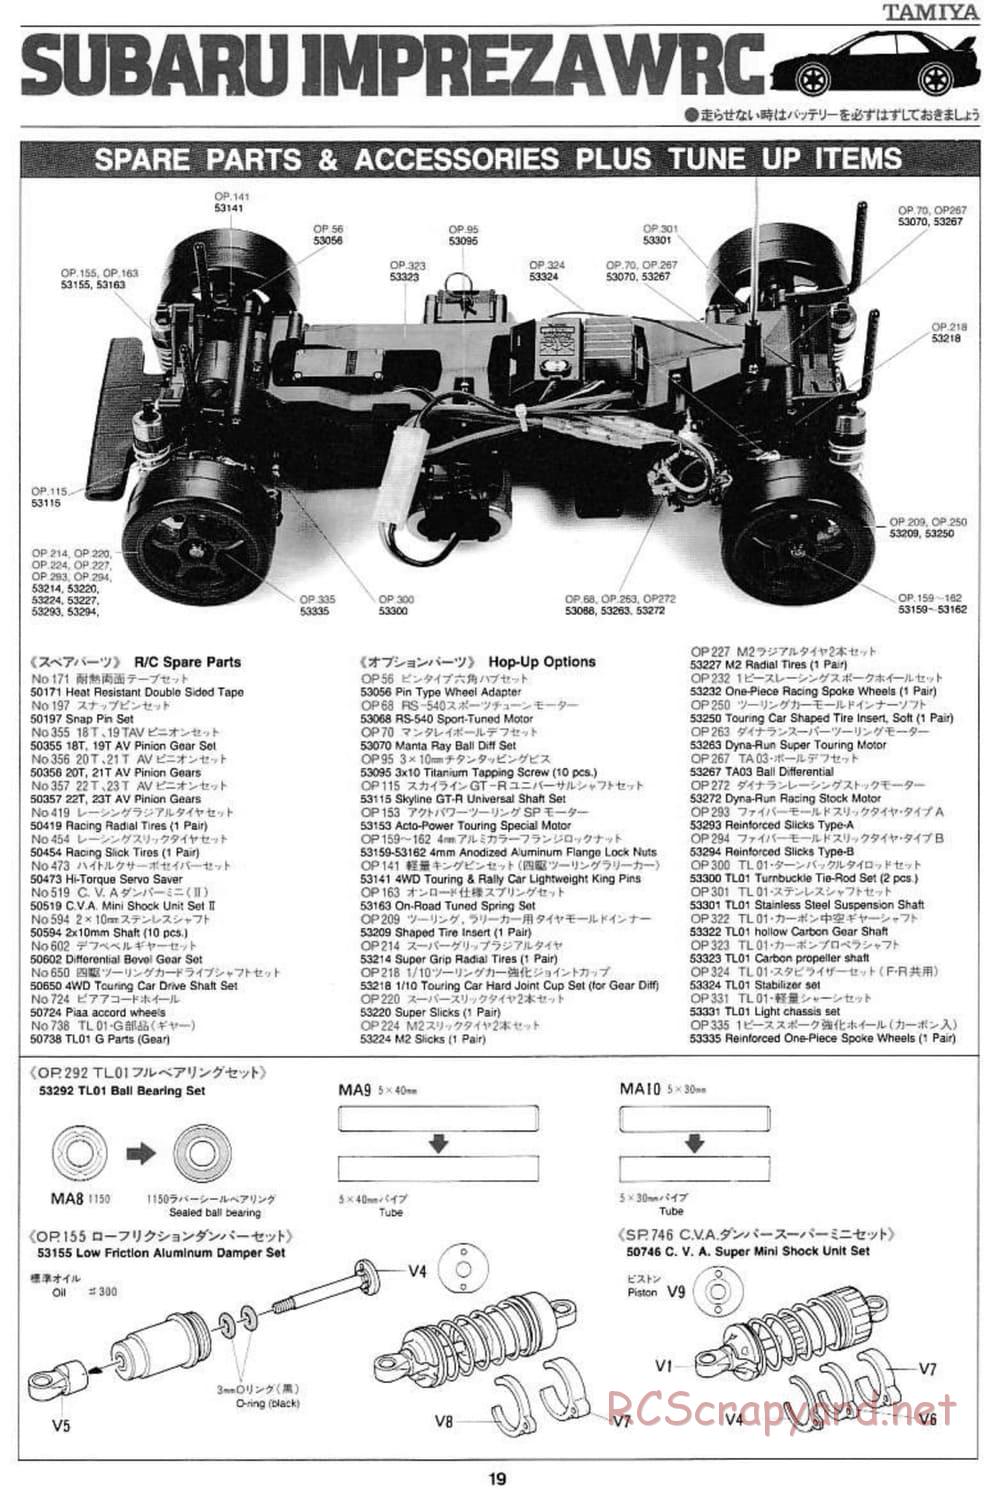 Tamiya - Subaru Impreza WRC - TL-01 Chassis - Manual - Page 19